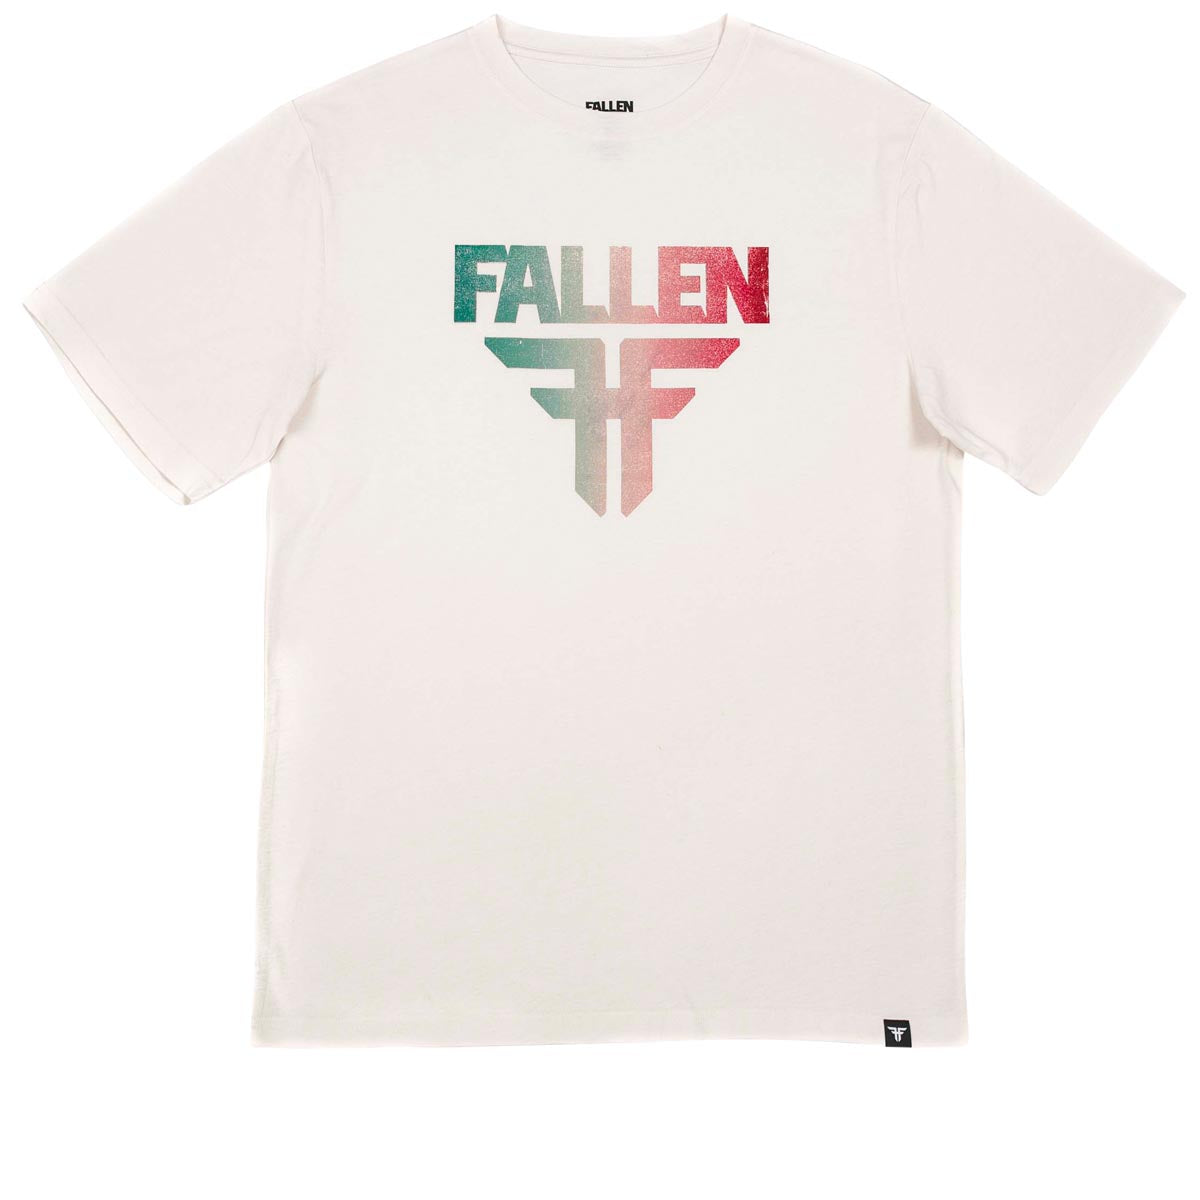 Fallen Insignia T-Shirt - Off White/Green image 1